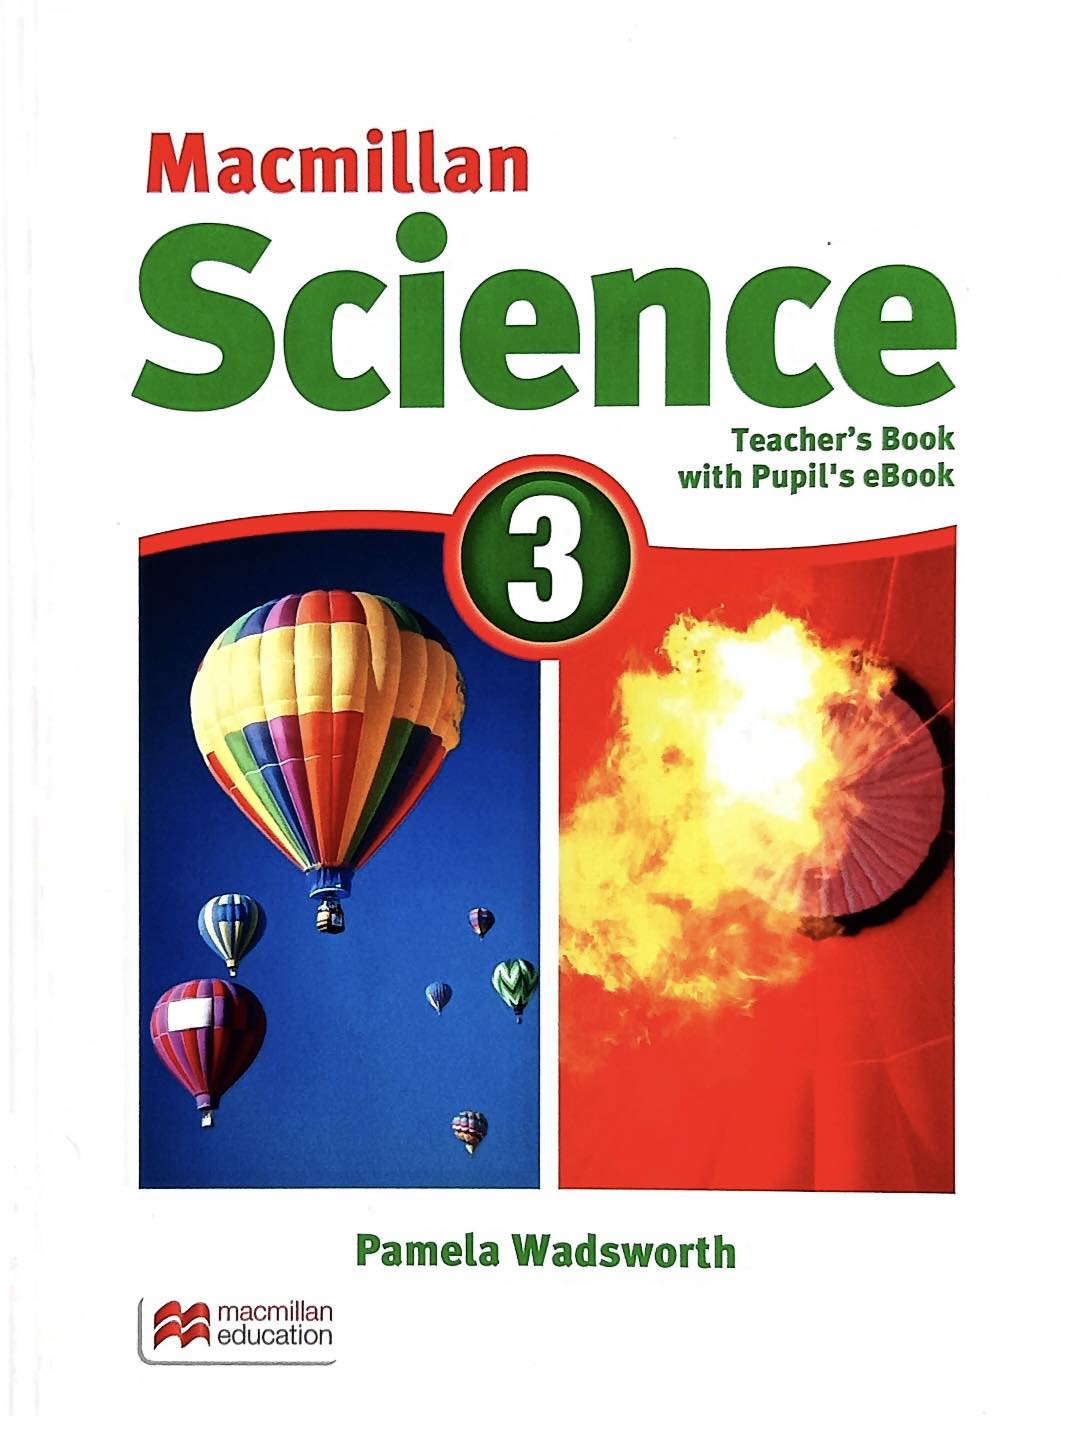 Macmillan Science Teacher's eBook (without Pupil's eBook)